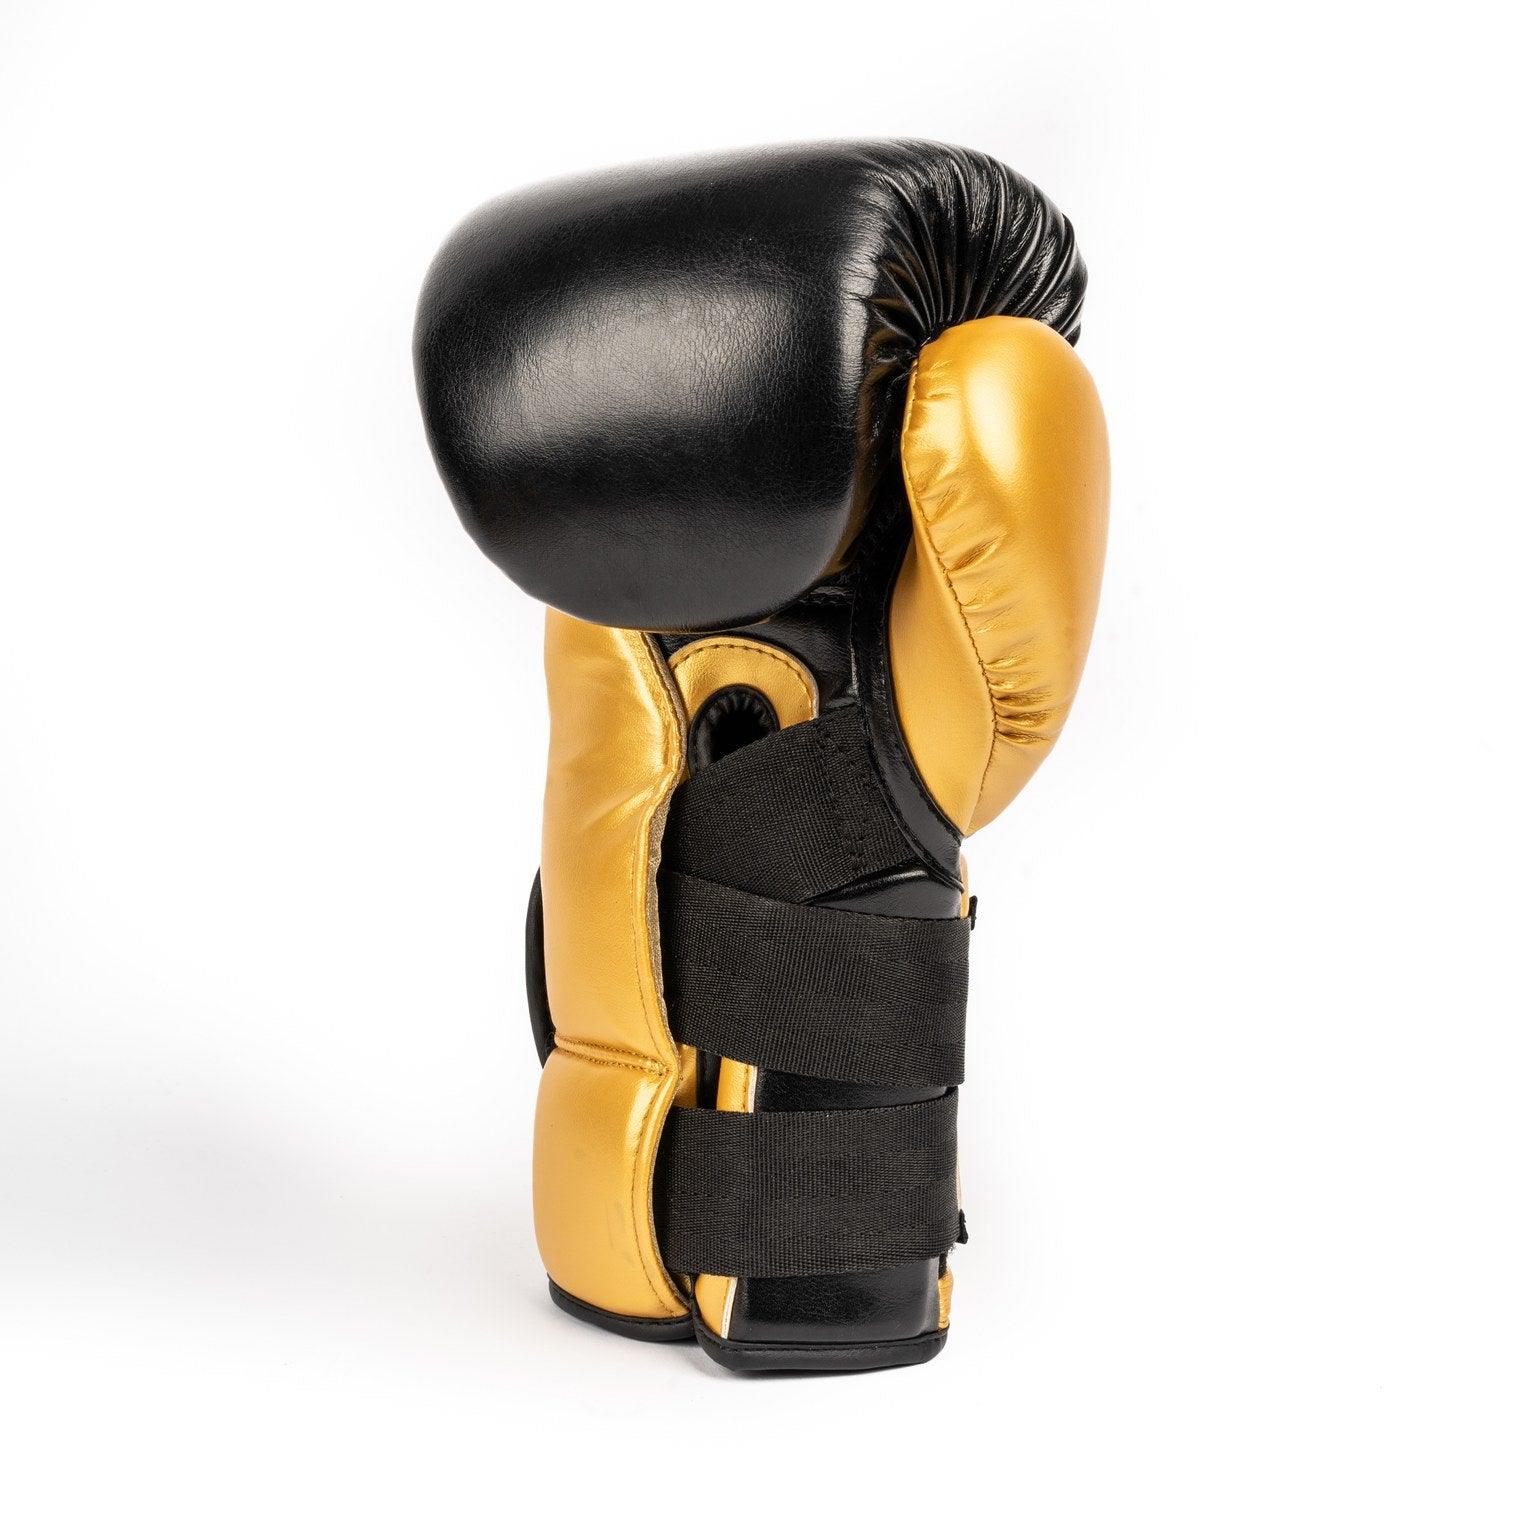 Crest Boxing Gloves "Pico 0.5" | Black/Gold - Crest - PFG